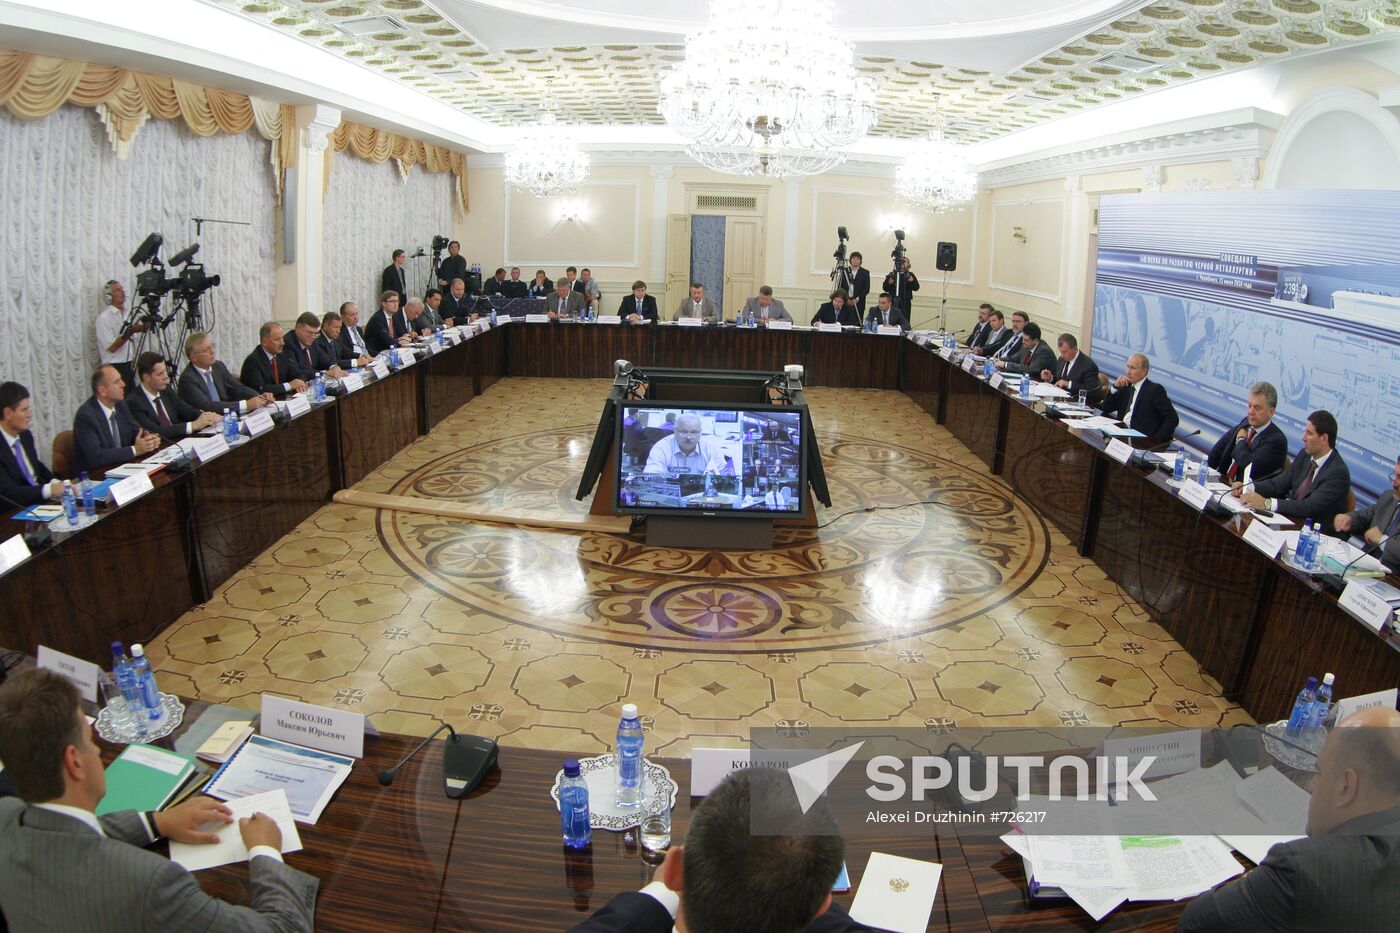 Vladimir Putin chairs meeting on ferrous metallurgy advancement